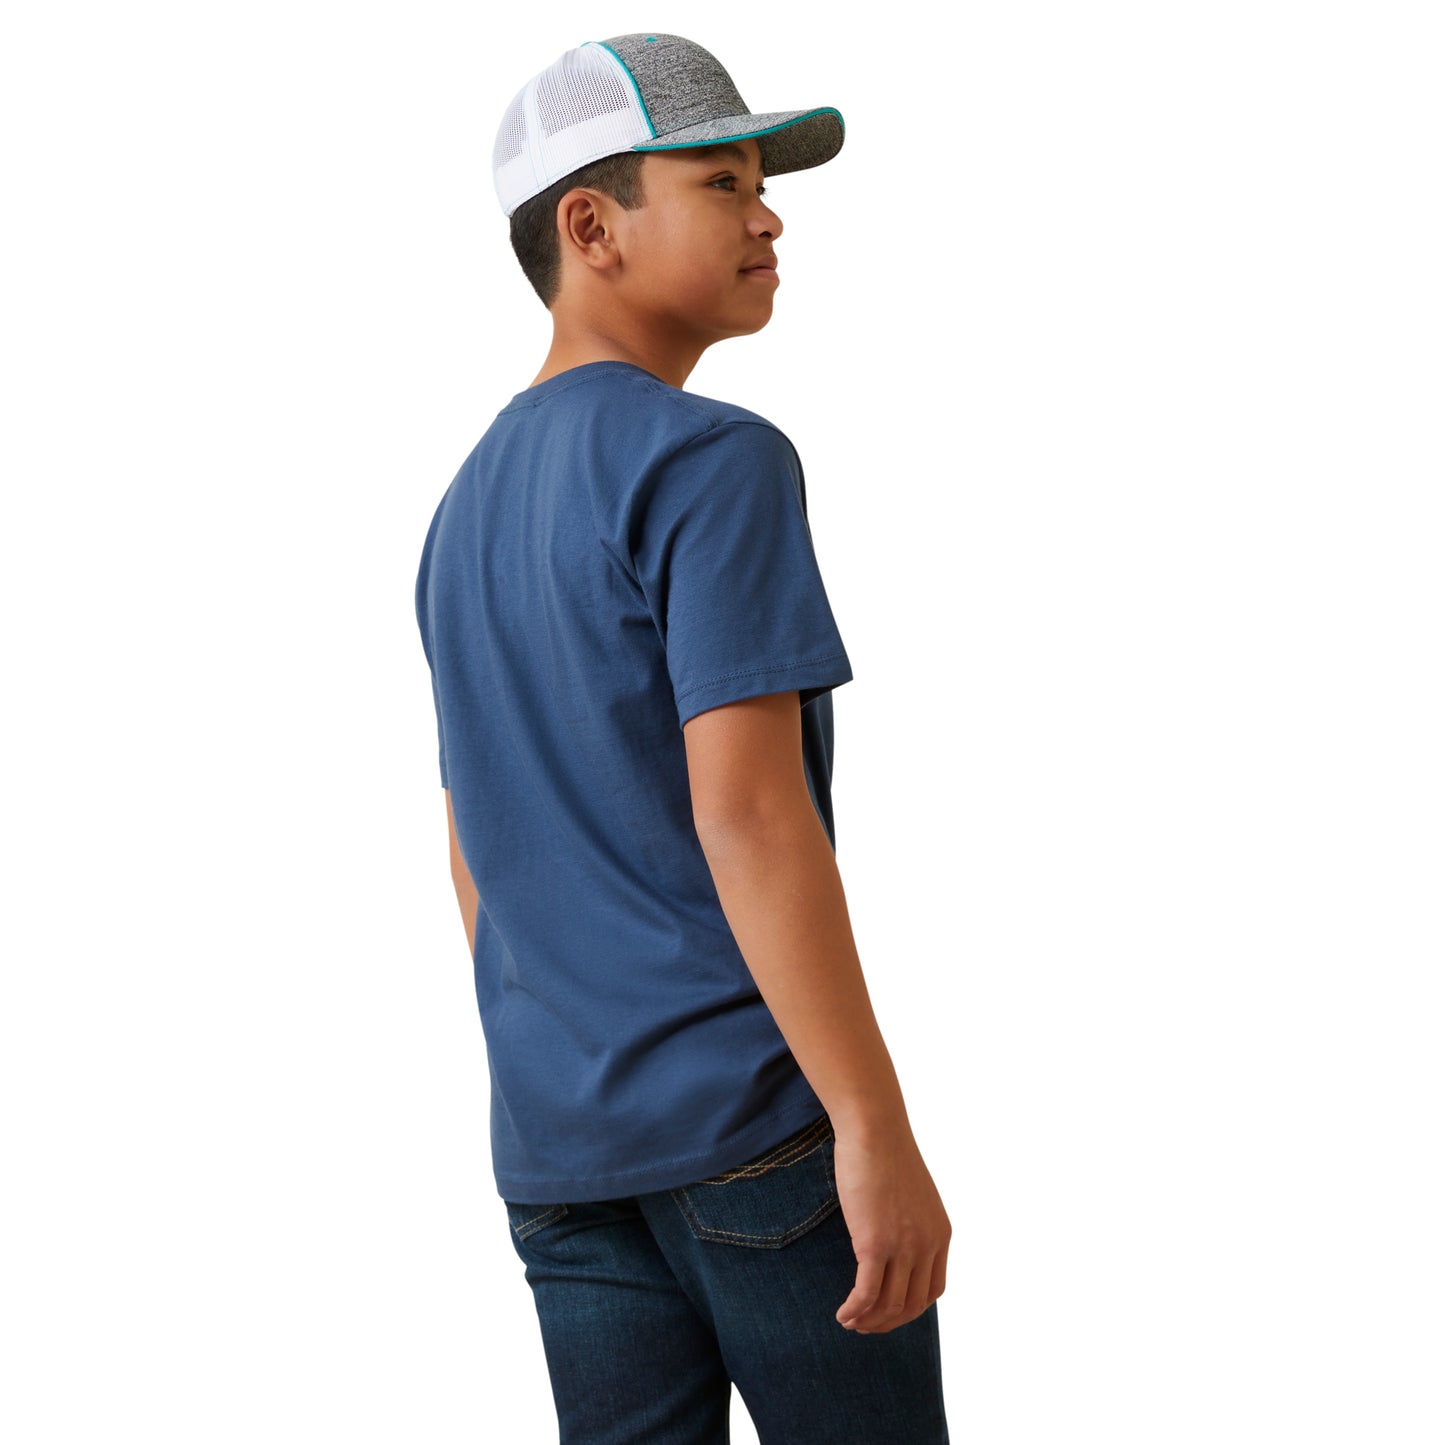 Ariat Youth Boy's Cowboy Planks Light Navy T-Shirt 10047653